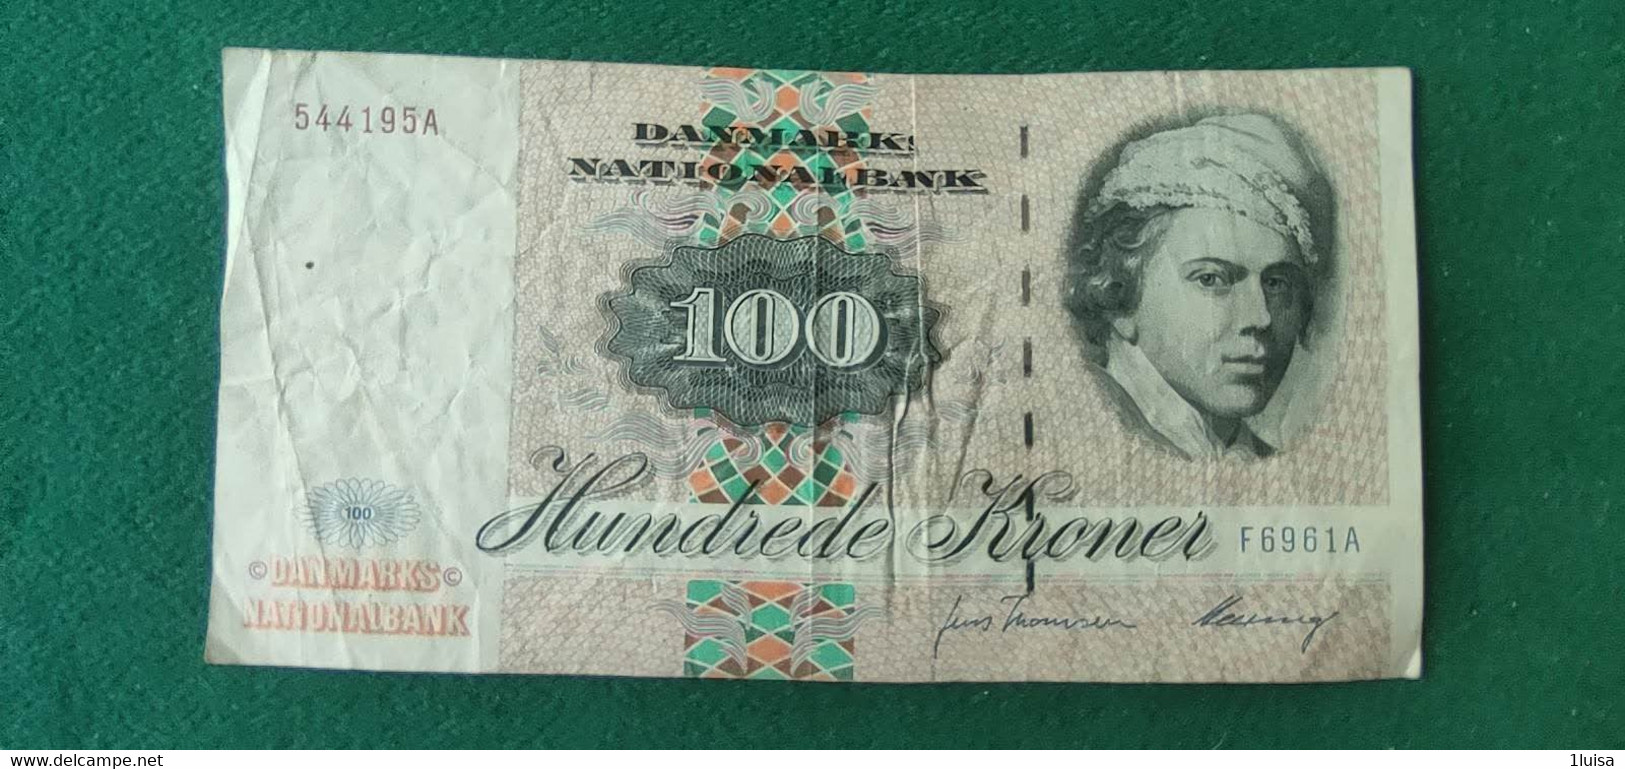 Danimarca 100 Kroner 1972 - Danemark